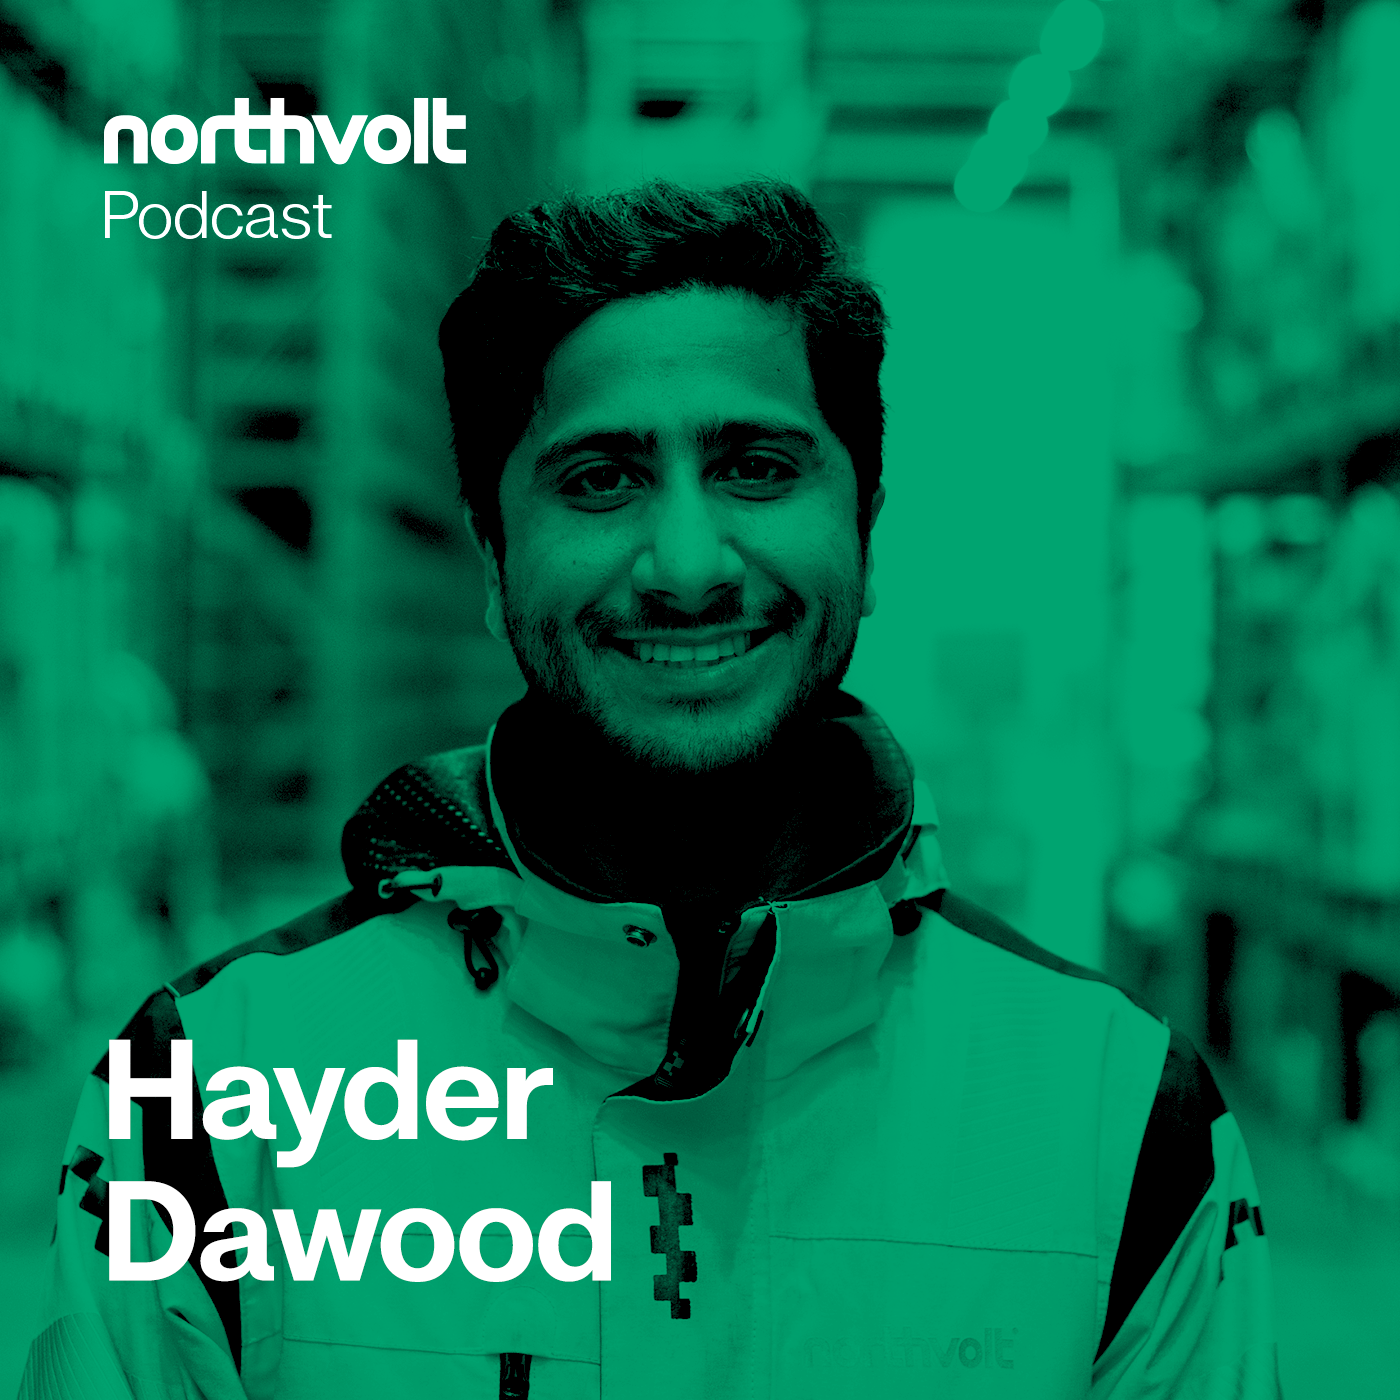 Challenge Accepted: Hayder Dawood